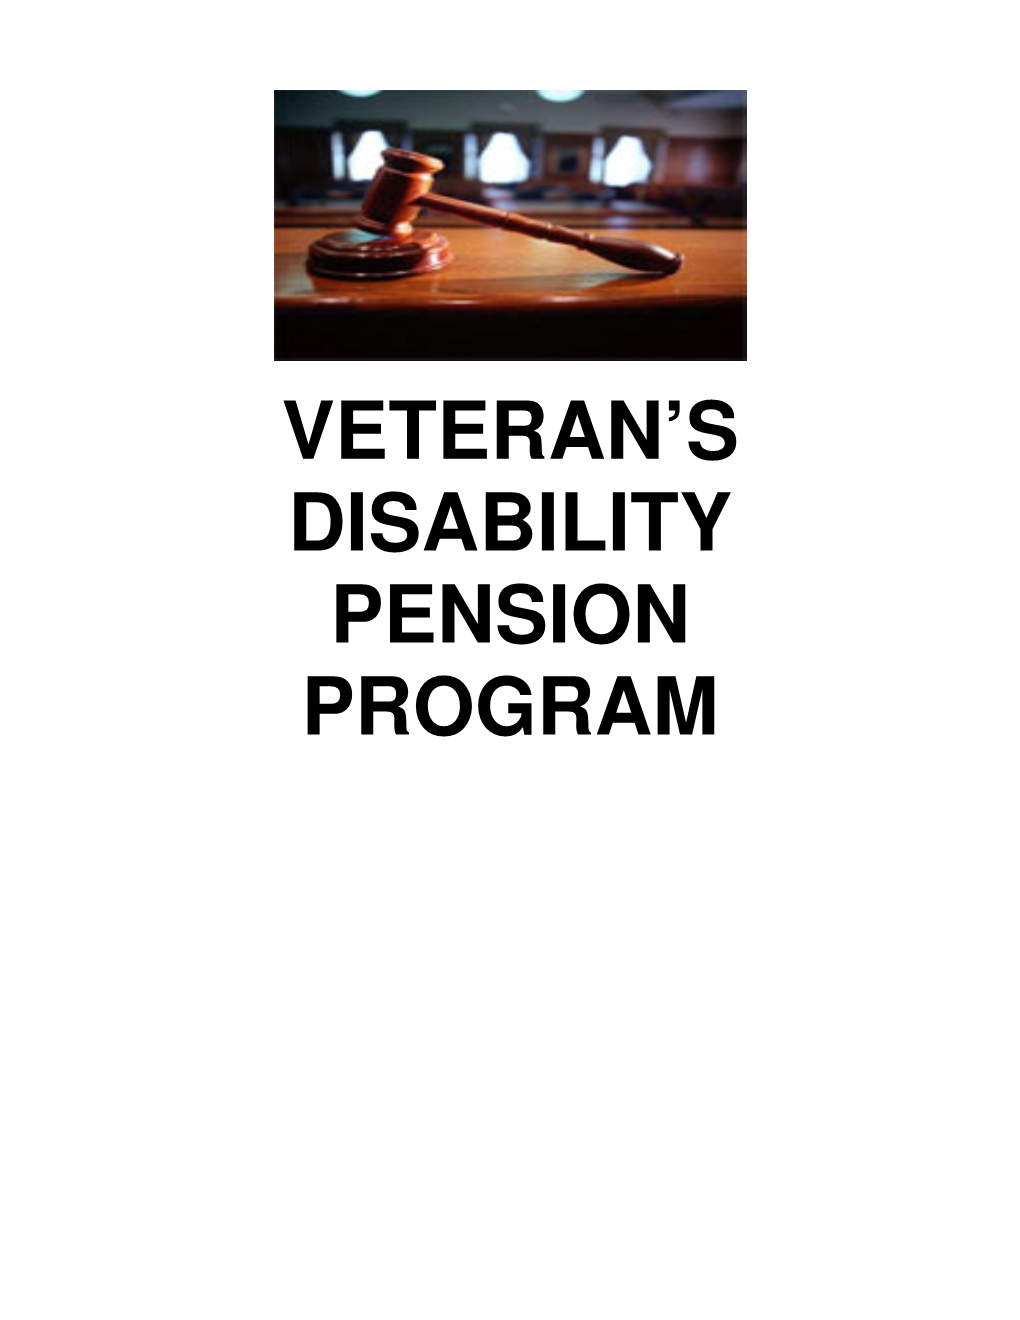 VA Disability Pension Program